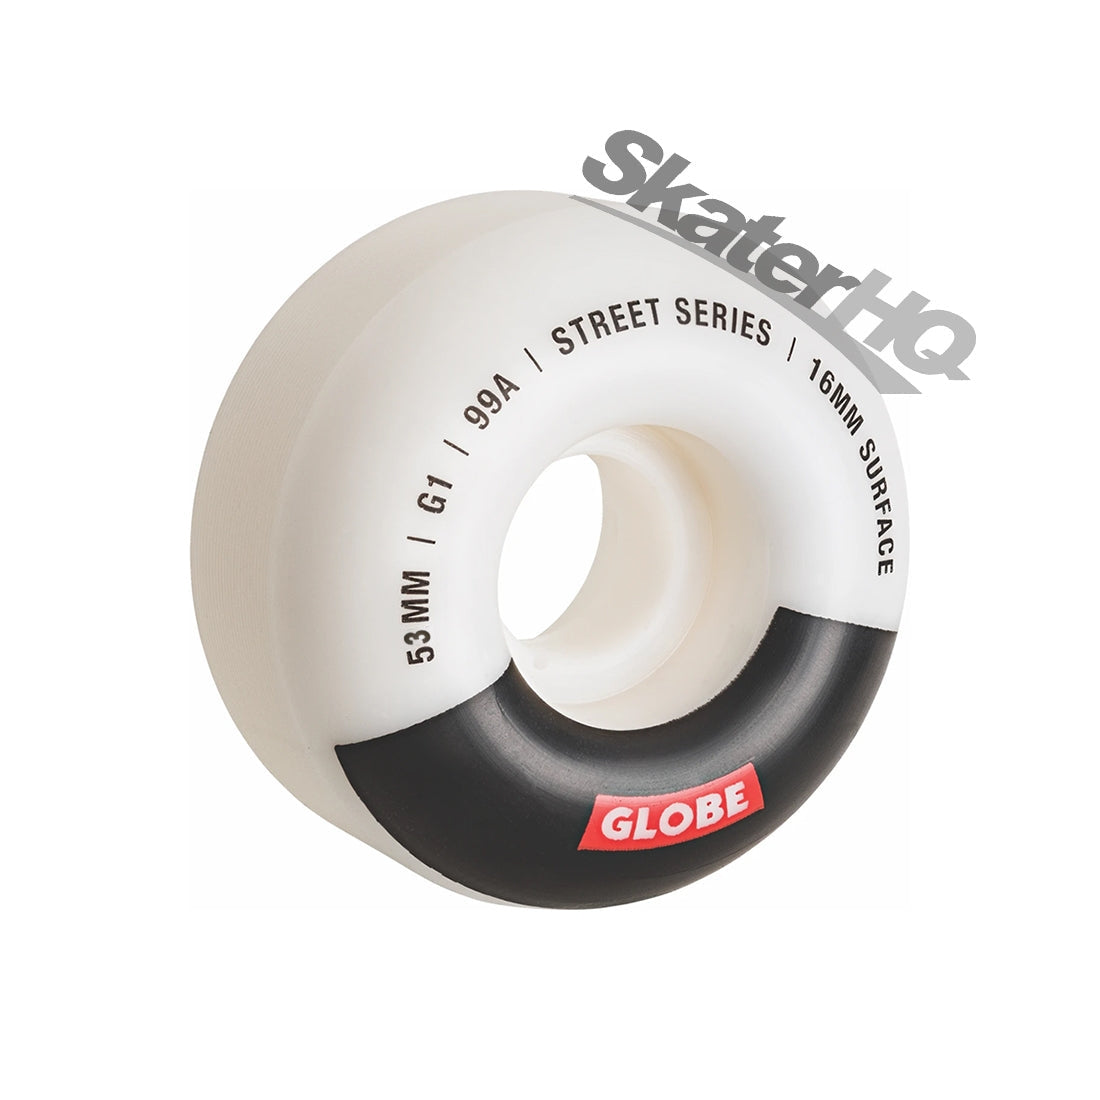 Globe G1 Street Bar 53mm 99a 4pk - White/Black Skateboard Wheels